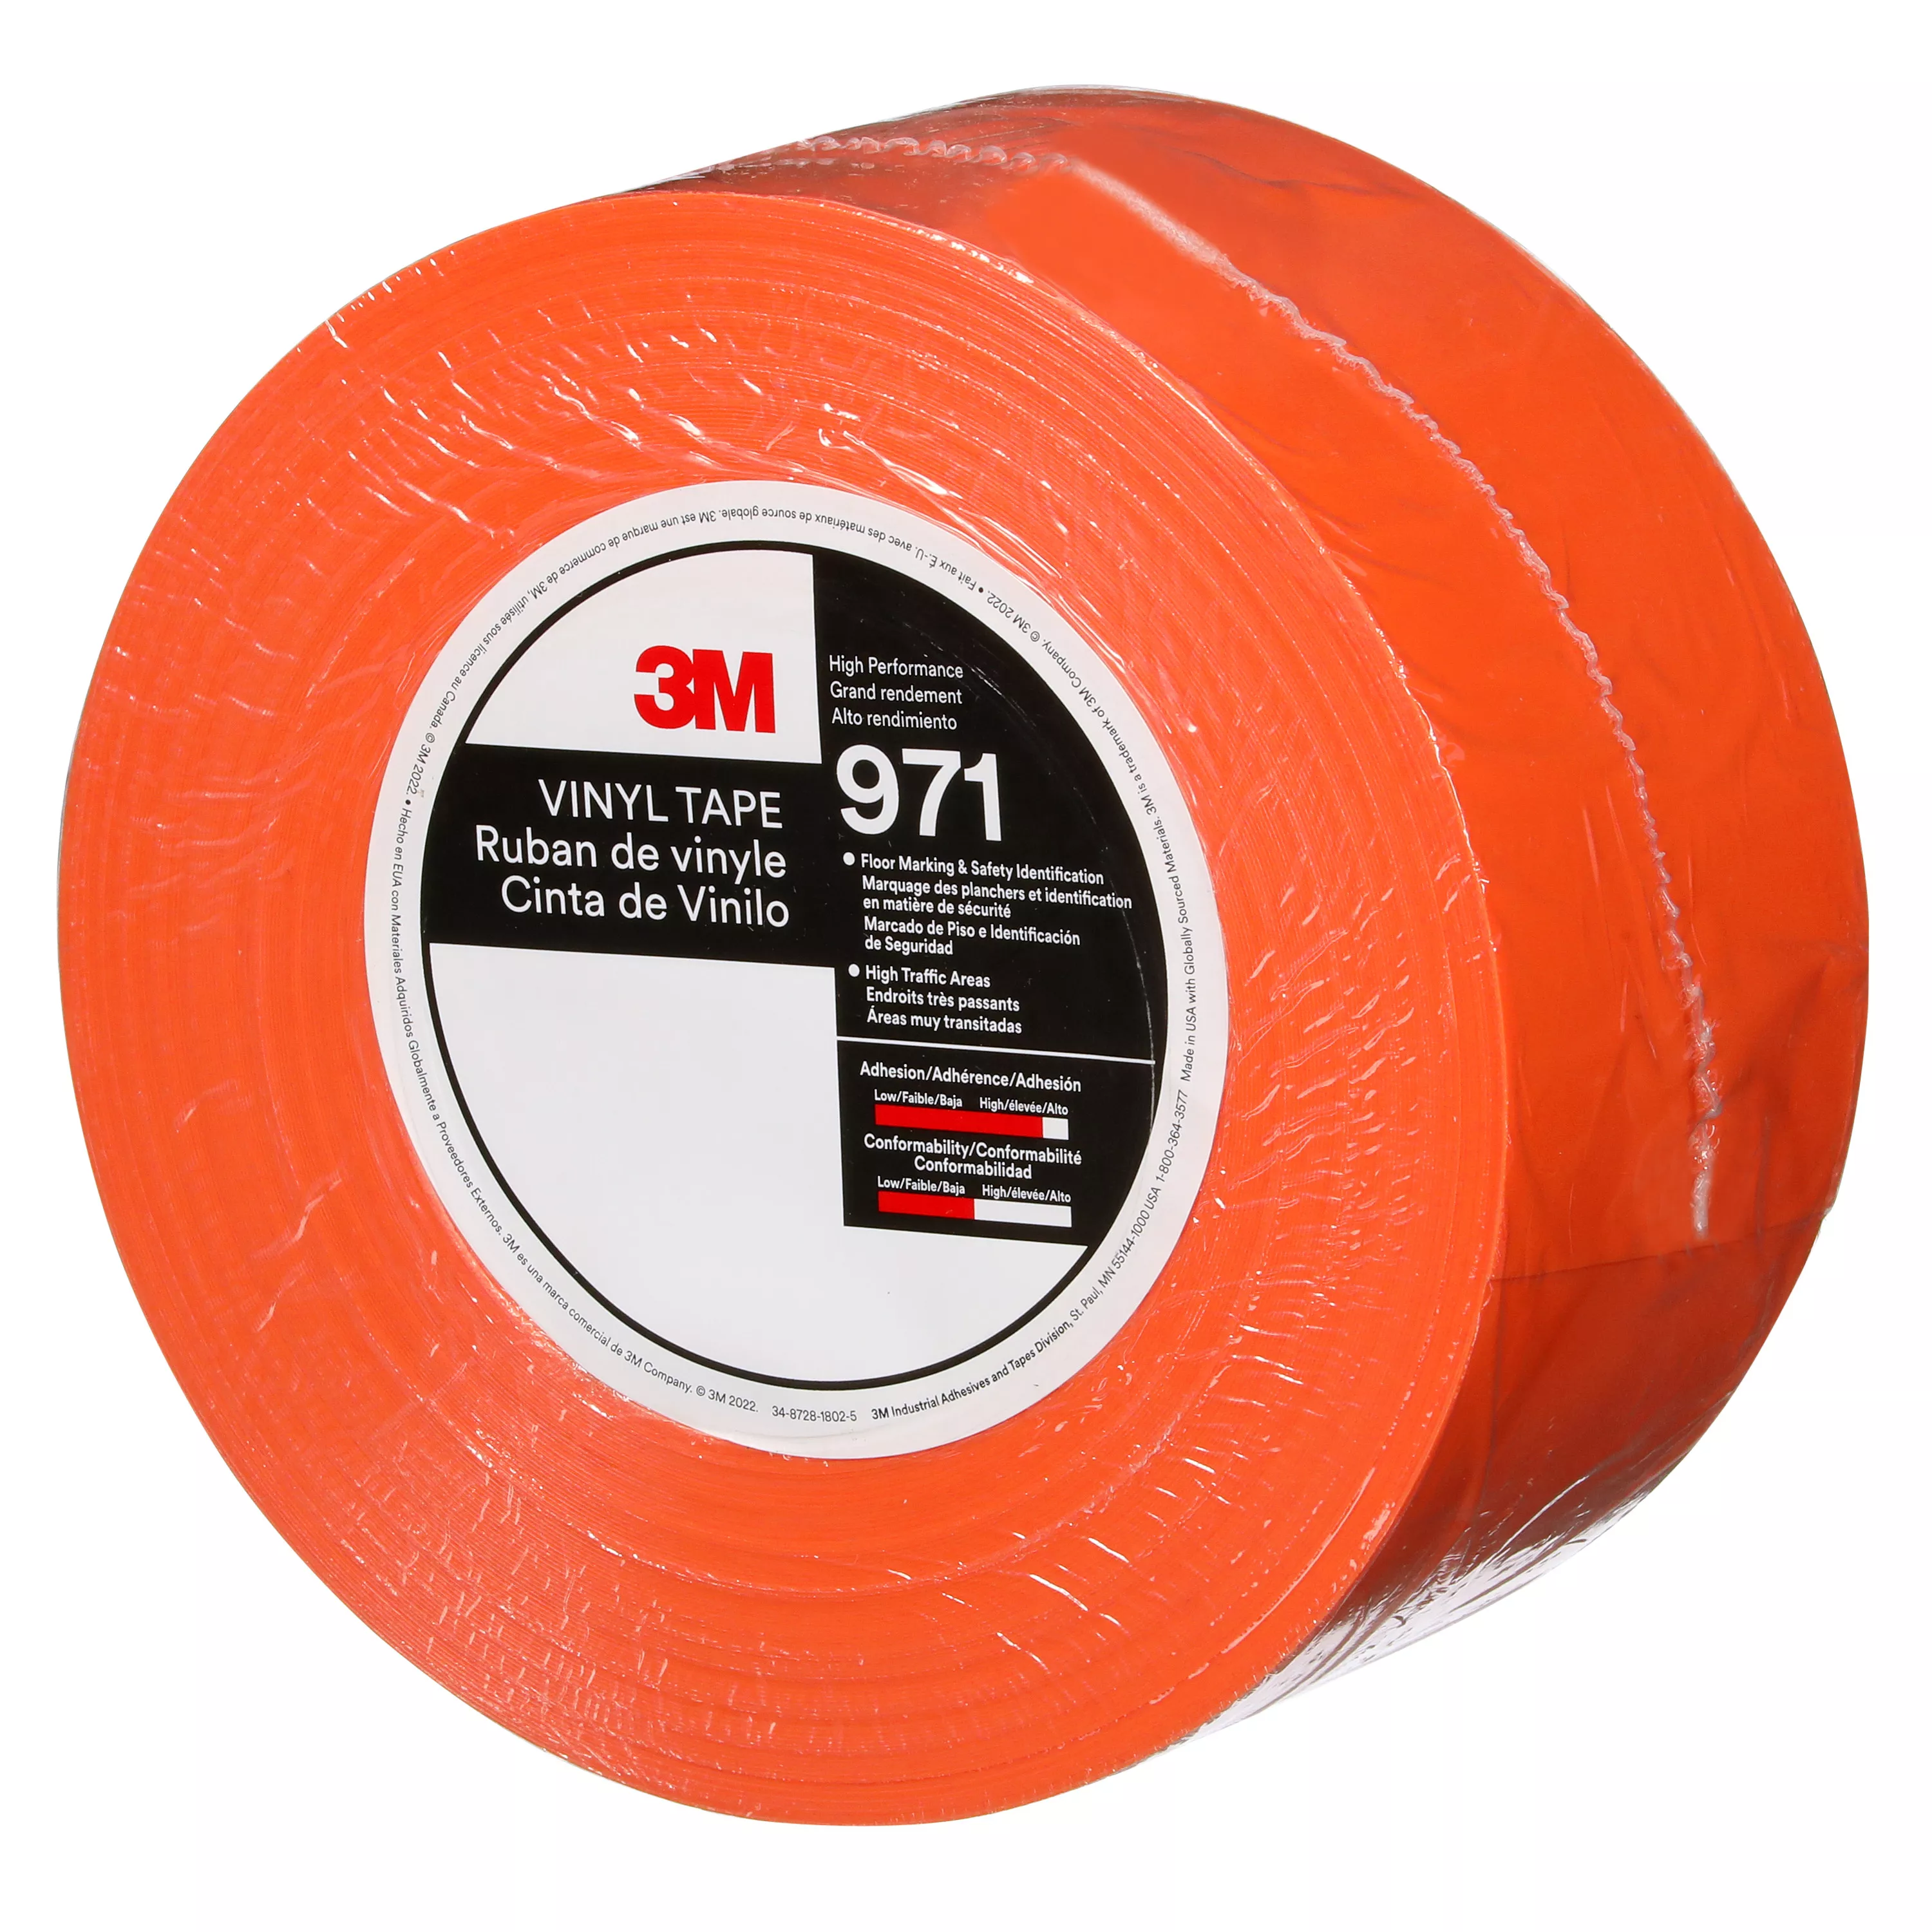 SKU 7100260043 | 3M™ Durable Floor Marking Tape 971